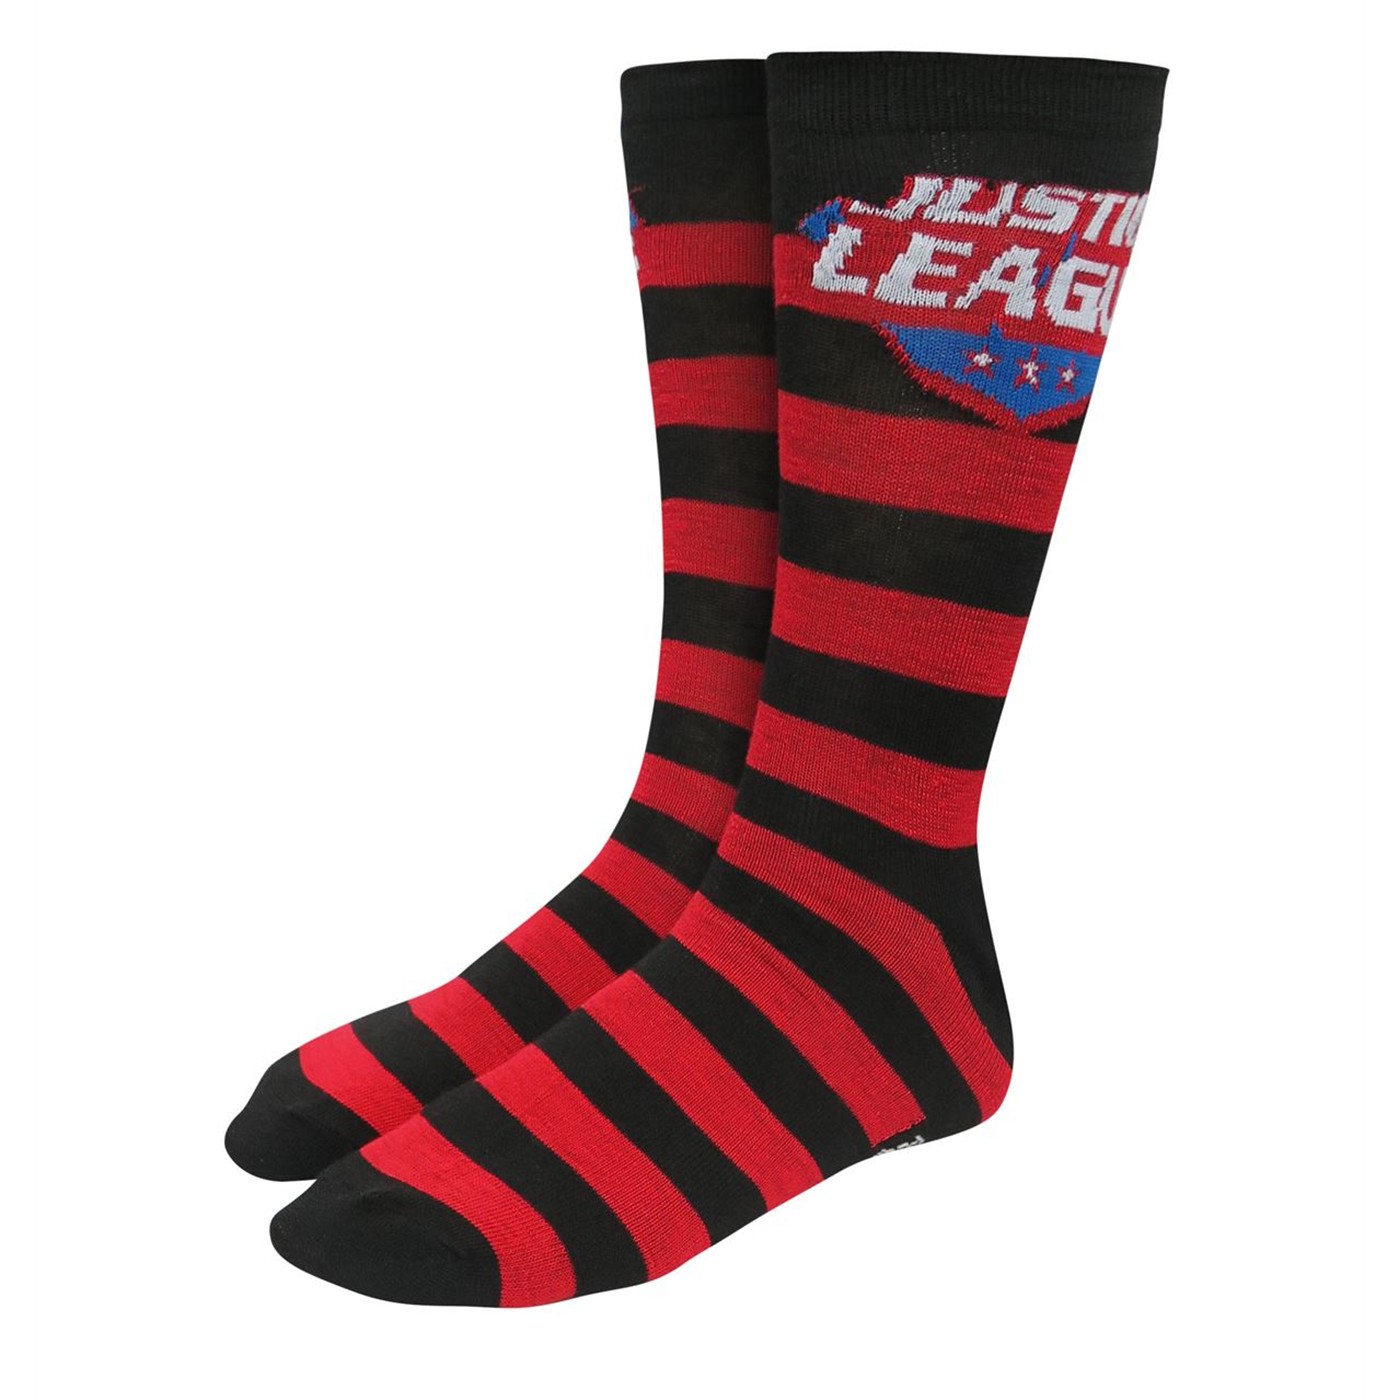 Justice League Retro Socks 2-Pack